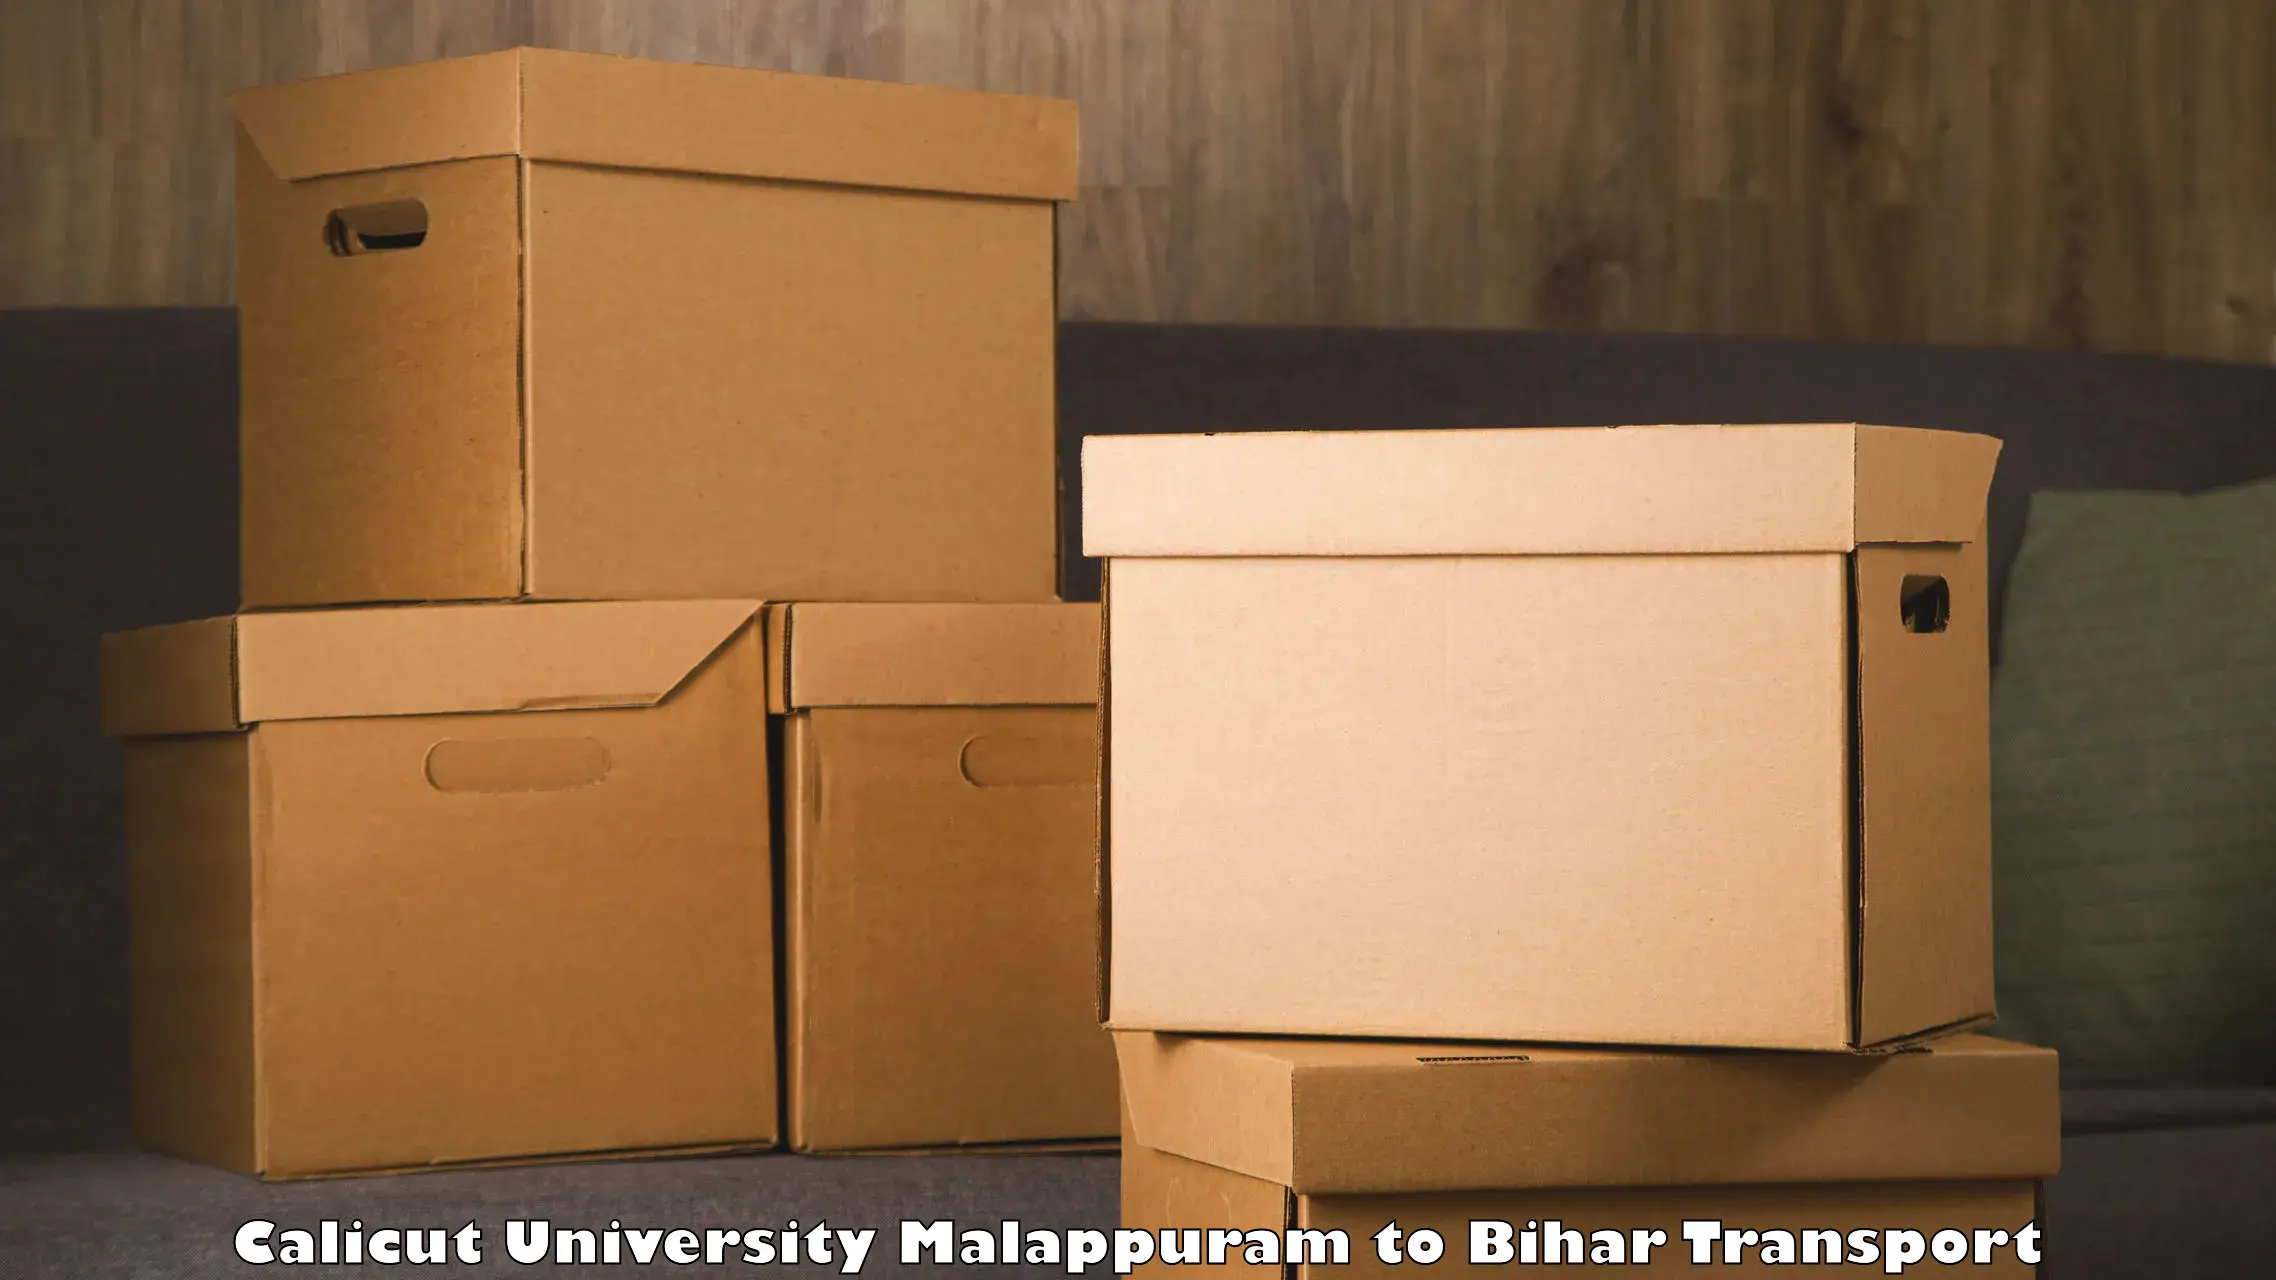 Container transport service Calicut University Malappuram to Bihar